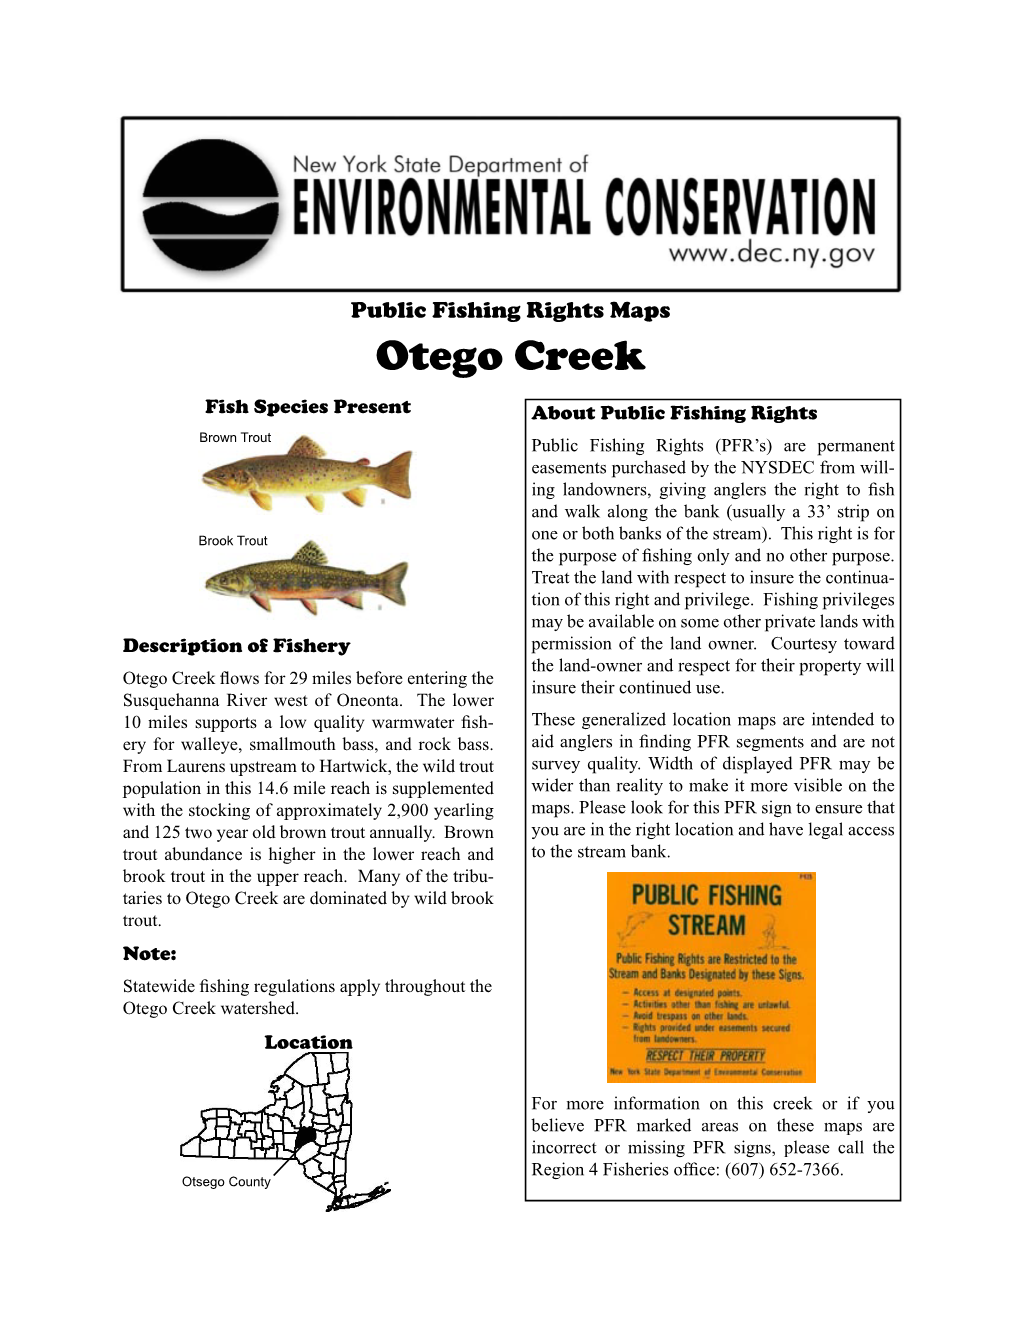 Public Fishing Rights Maps: Otego Creek